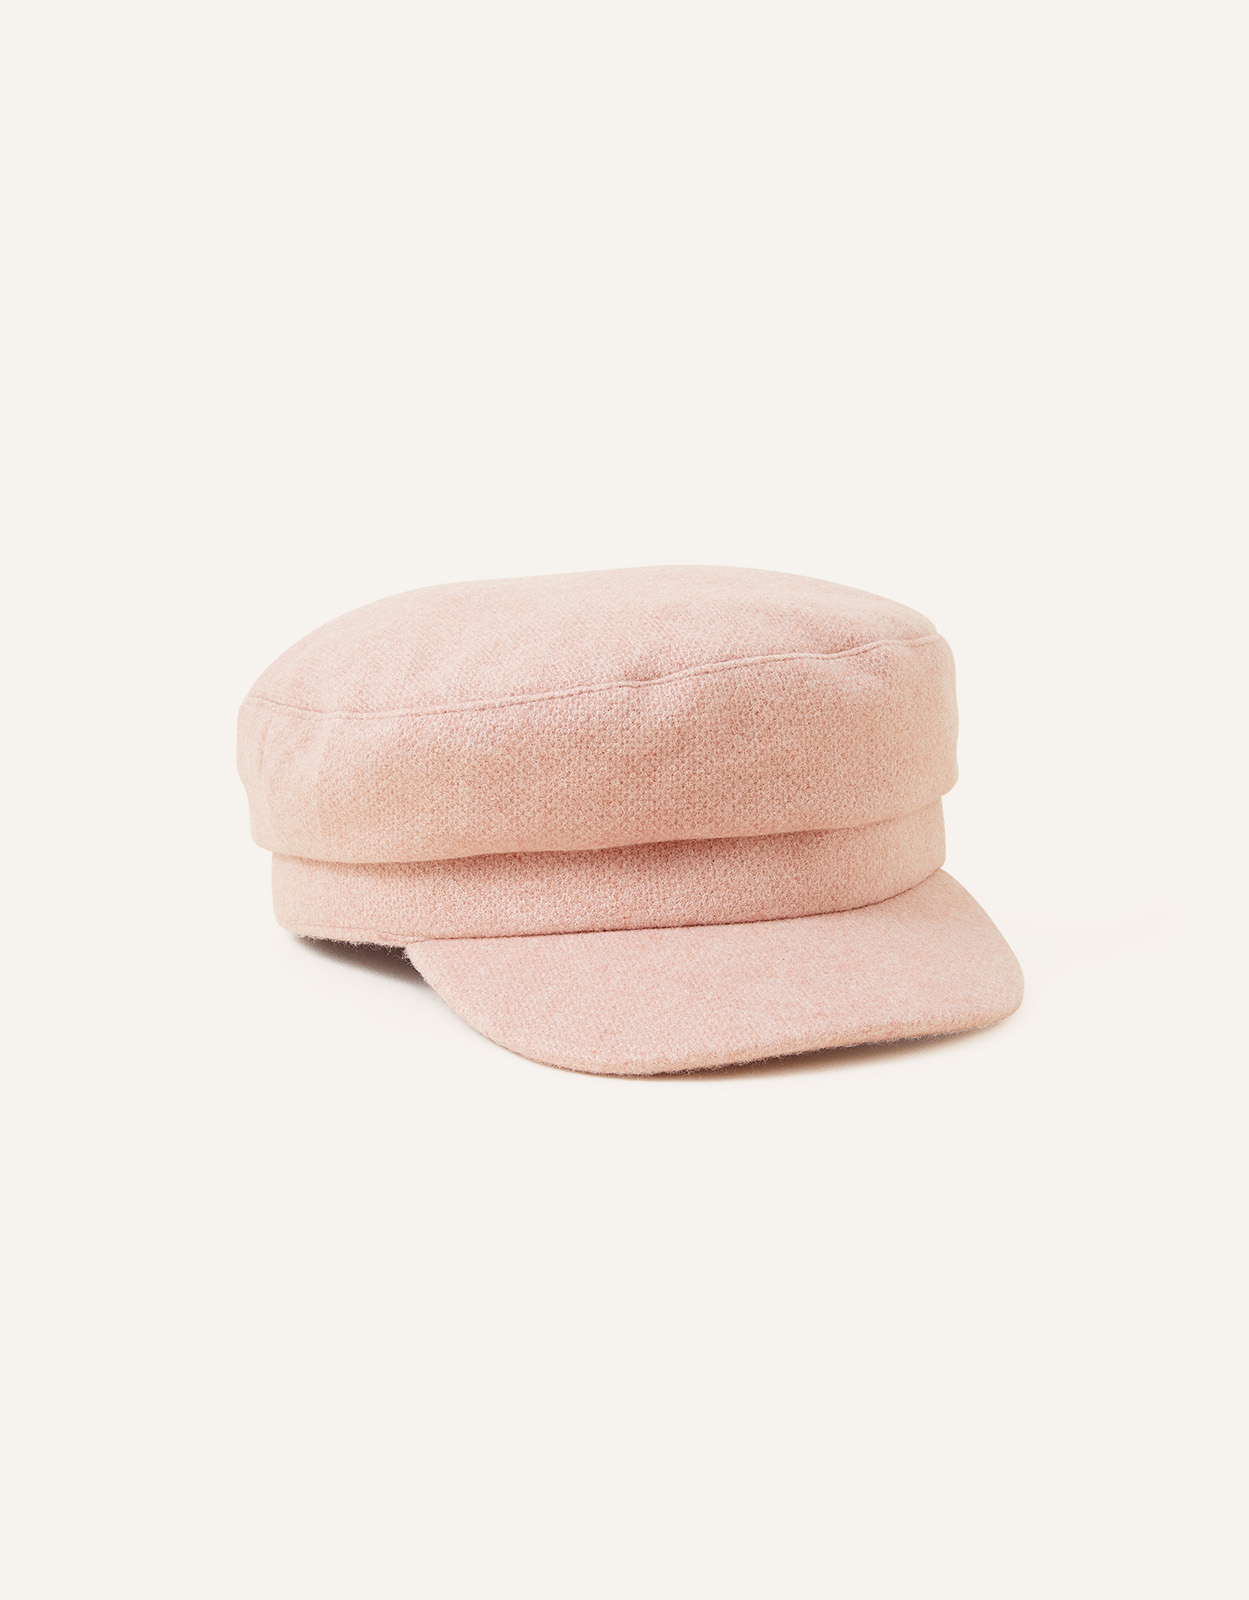 Accessorize Women's Soft Textured Baker Boy Hat Pink